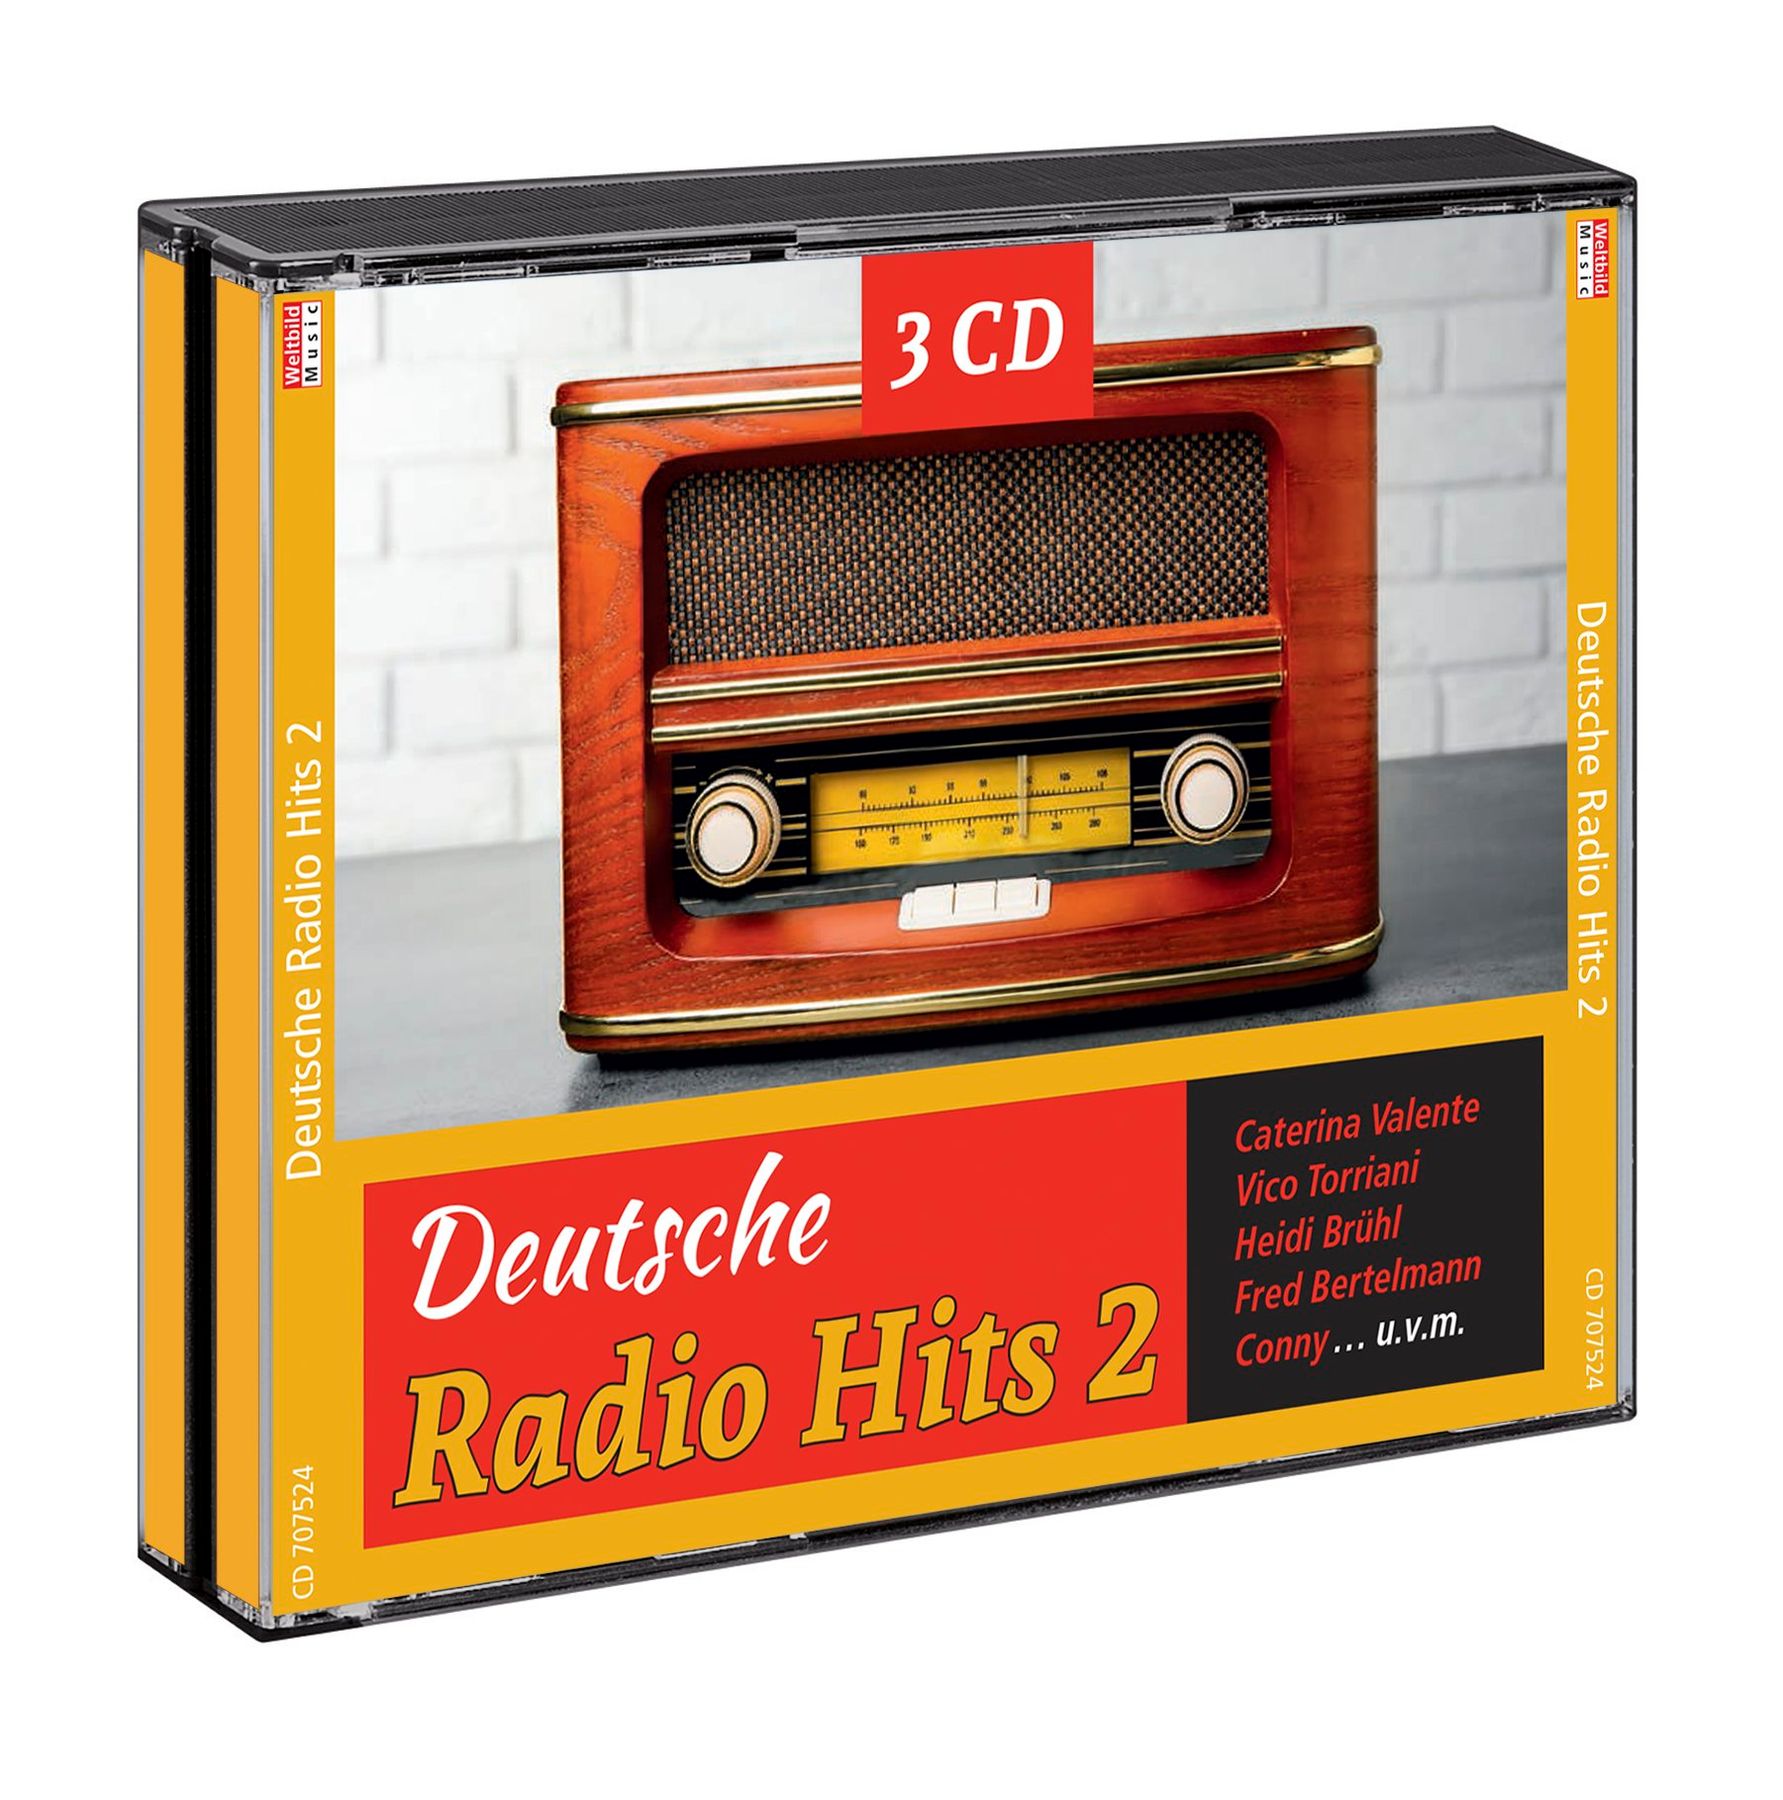 Deutsche Radio Hits 2 CD günstig bestellen bei Weltbild.de